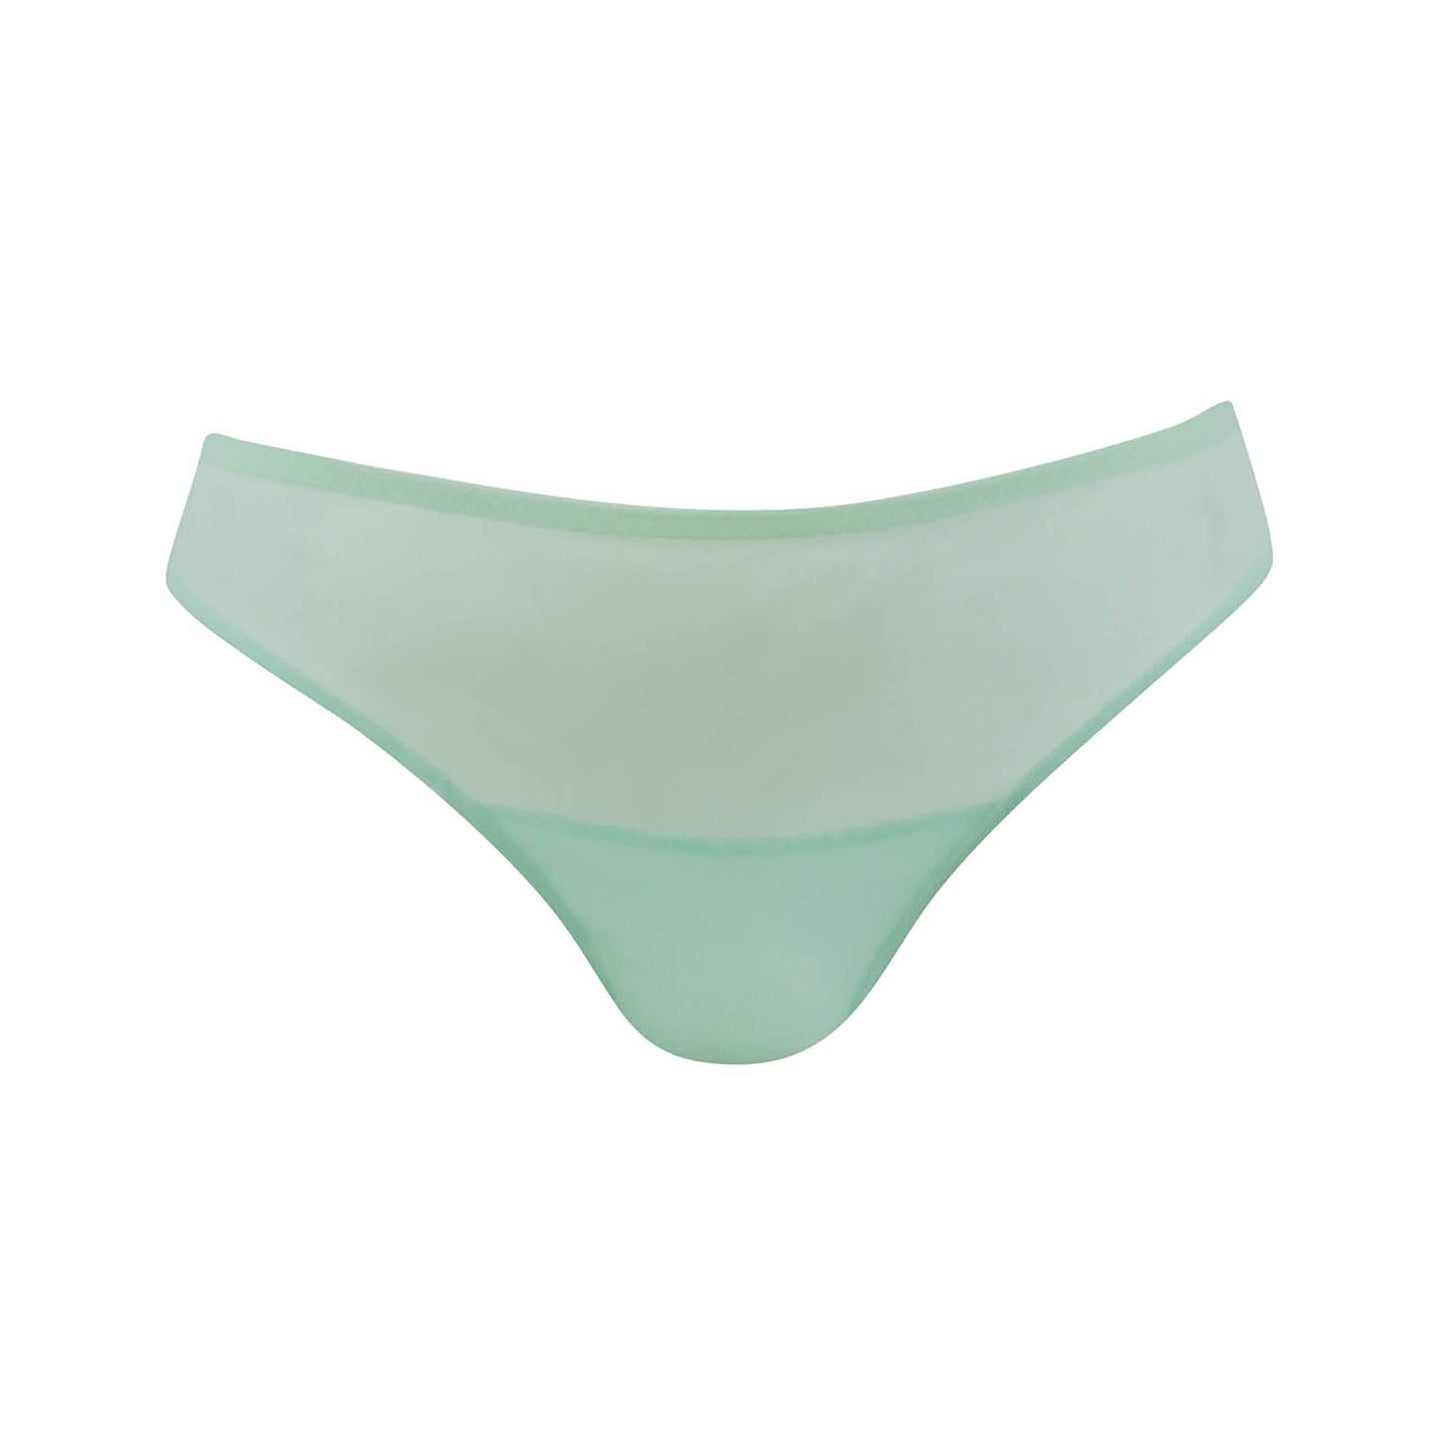 Madewell Womens Mesh Trim Bikini Panties mint green Underwear